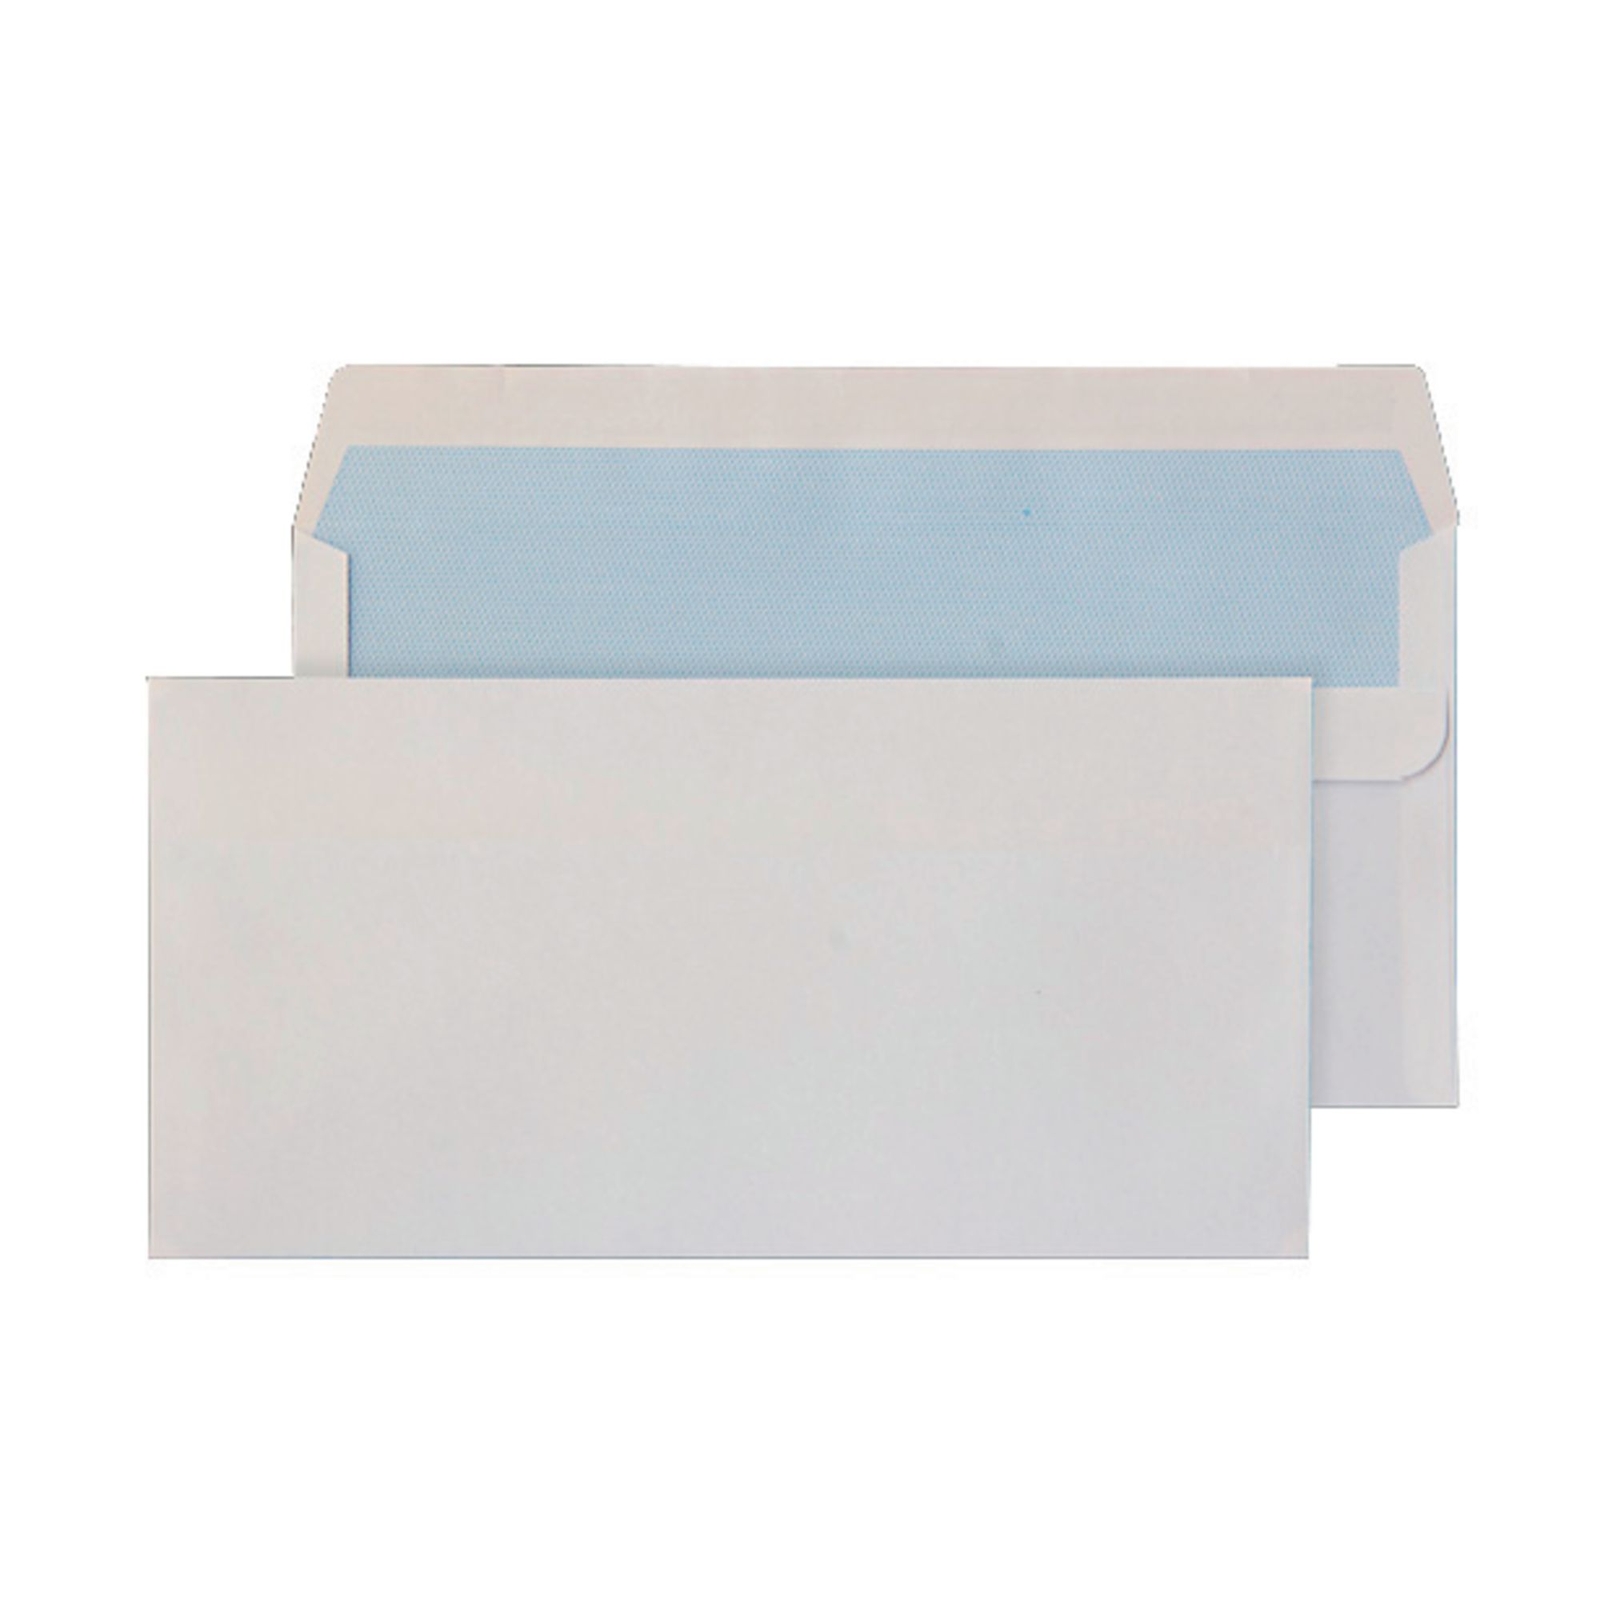 DL White Self Seal Wallet Envelopes - Box of 500